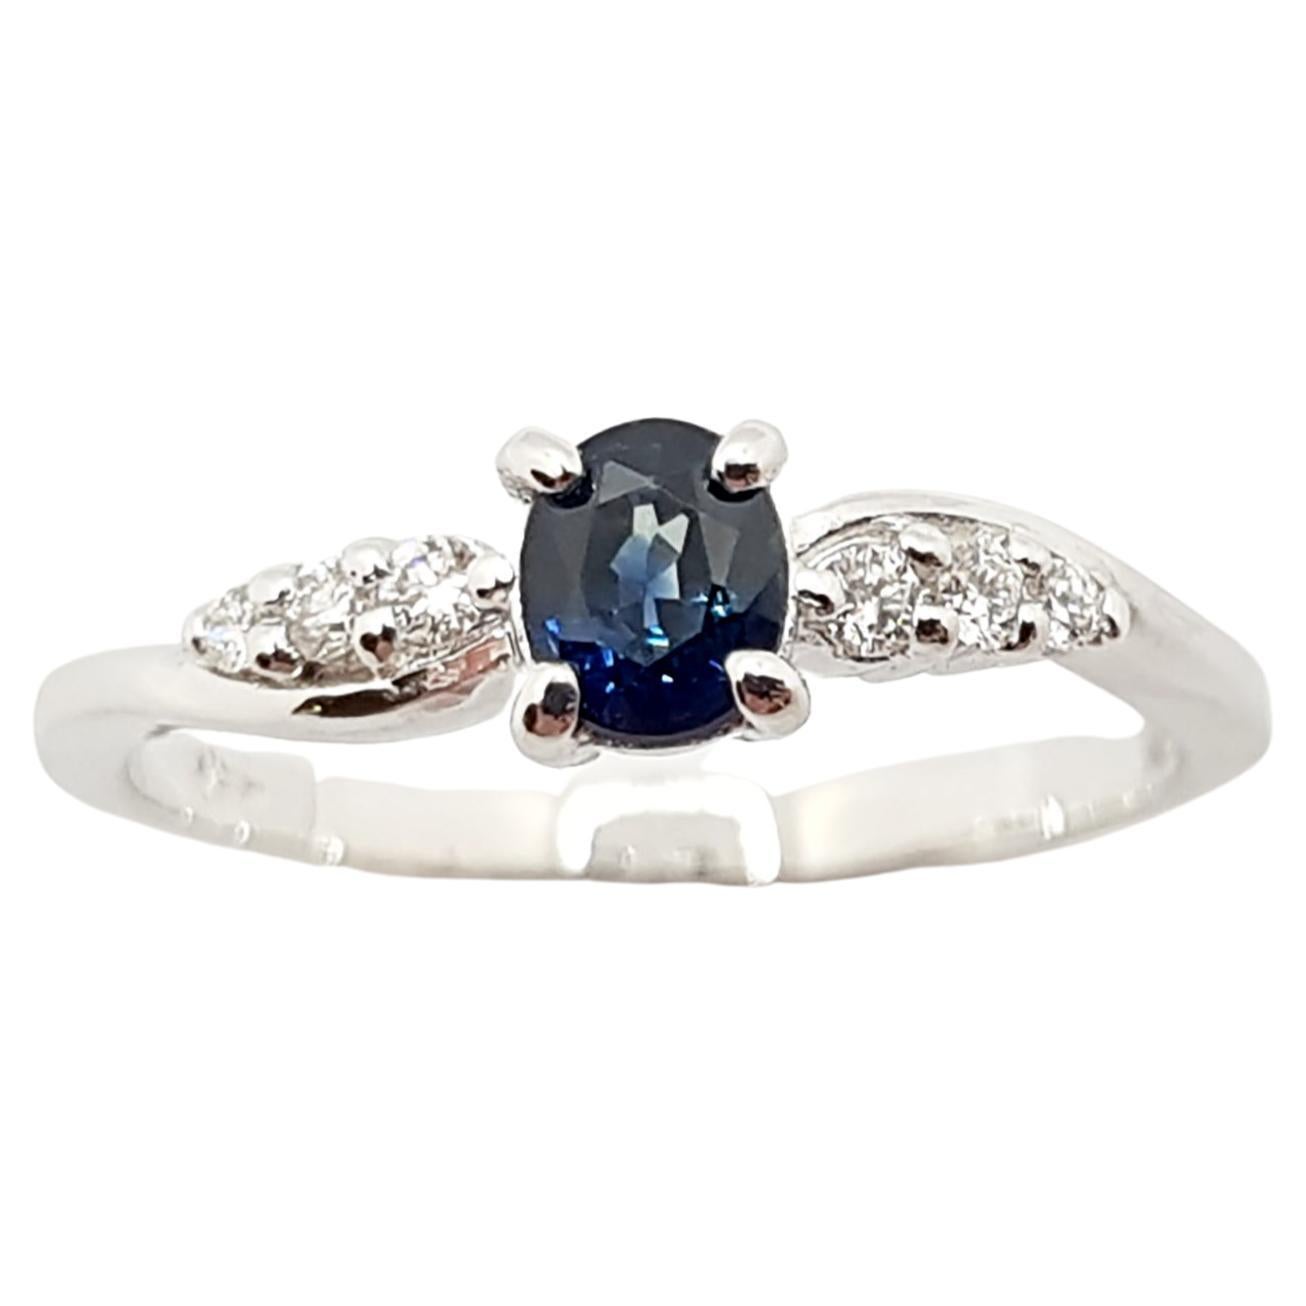 Blue Sapphire with Diamond Ring set in 18 Karat White Gold Settings